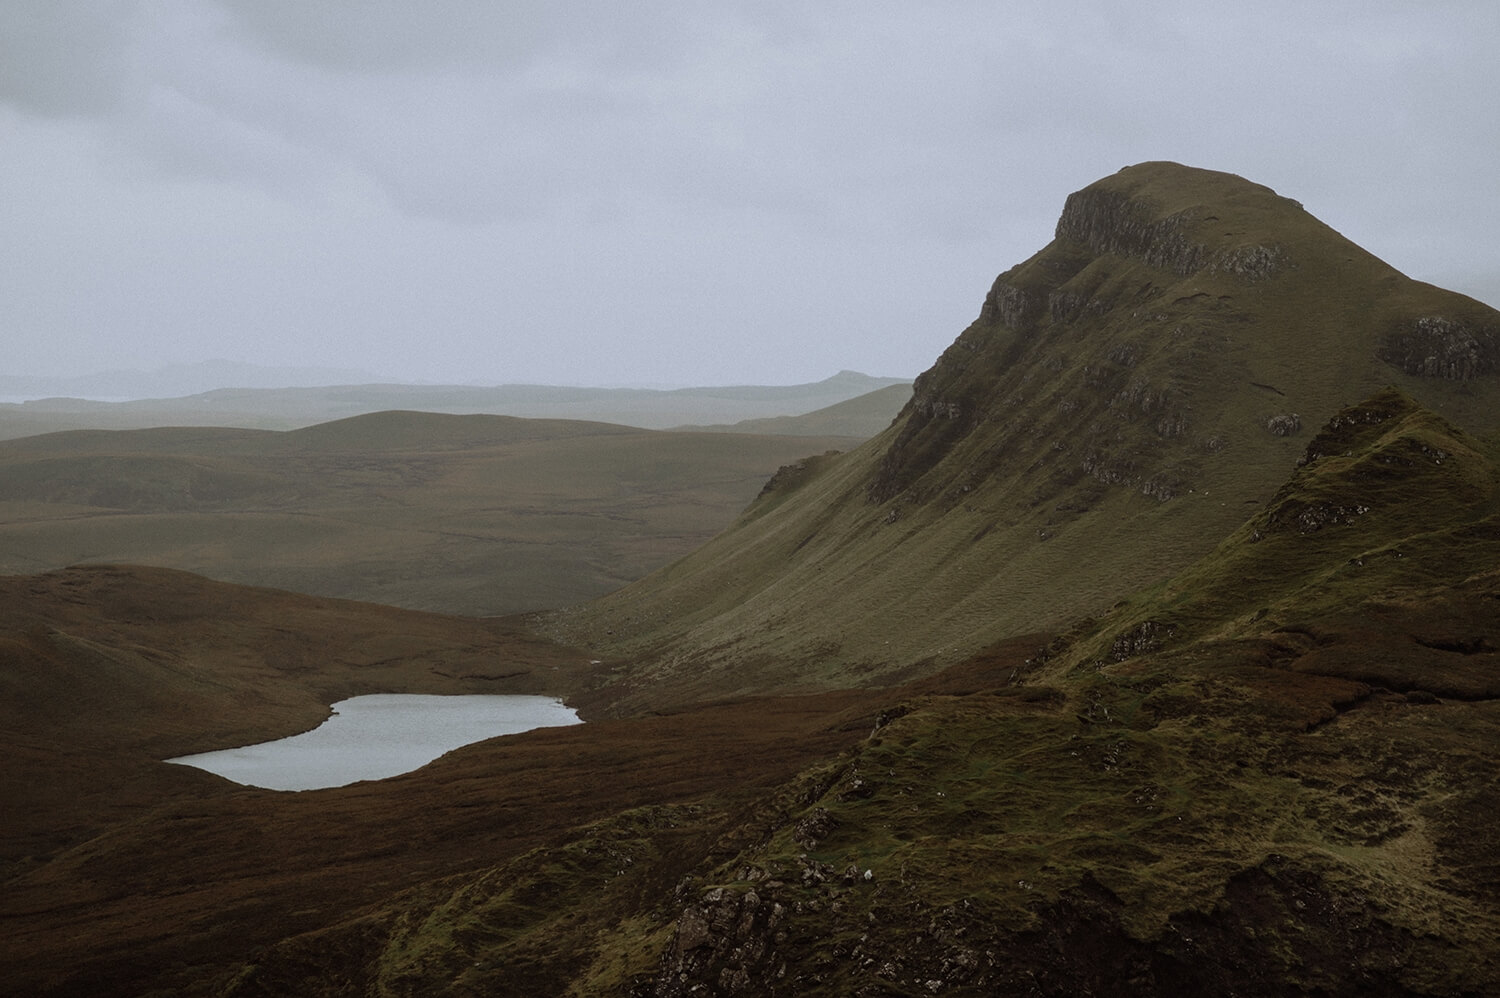 Beautiful landscape photography from Scotland.